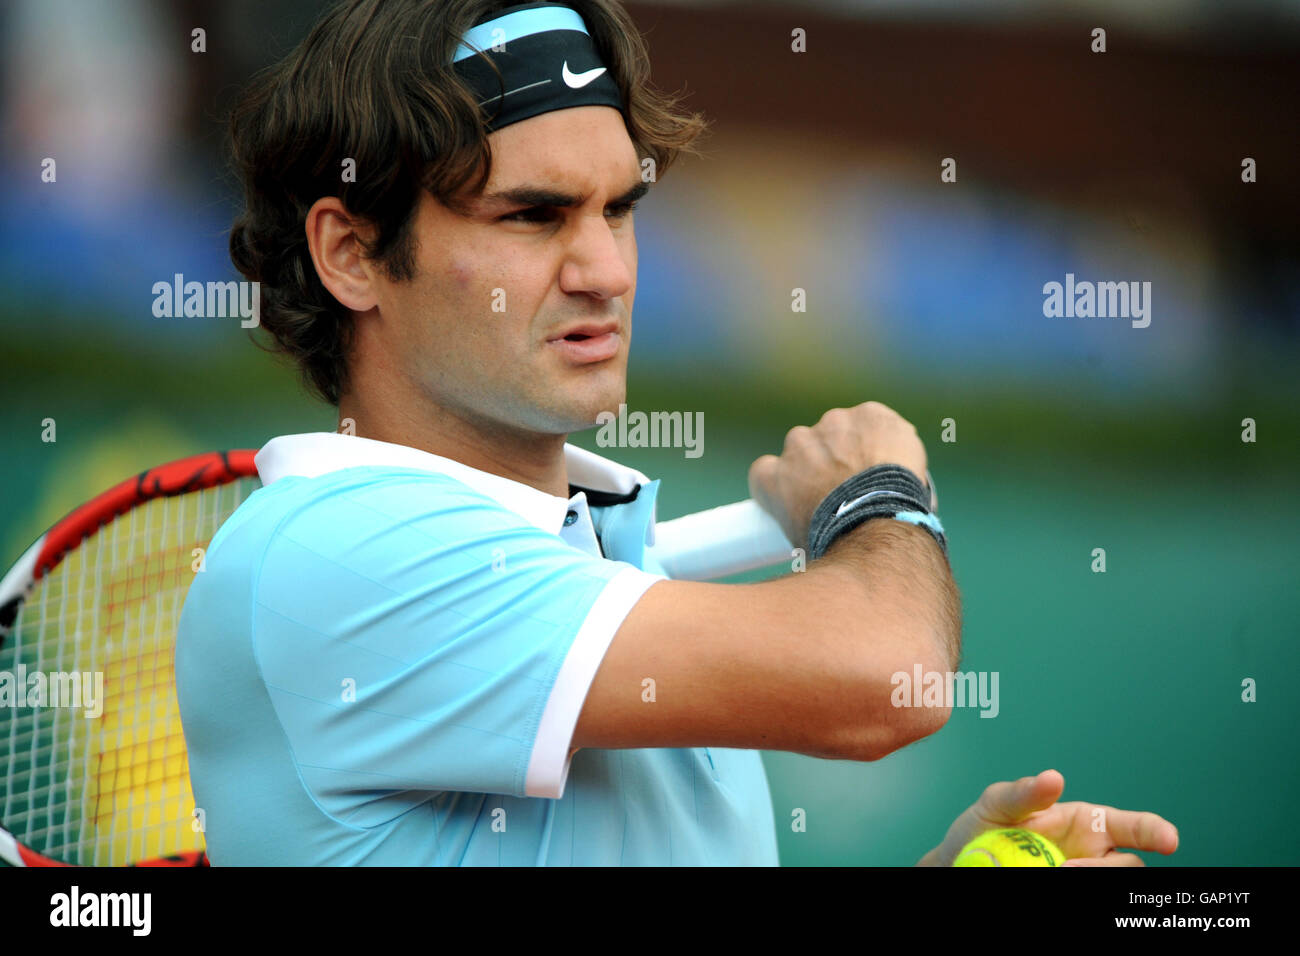 Tennis - ATP Masters Series - Monte Carlo -. Switzerland's Roger Federer in  action against Spain's Ruben Ramirez Hidalgo Stock Photo - Alamy